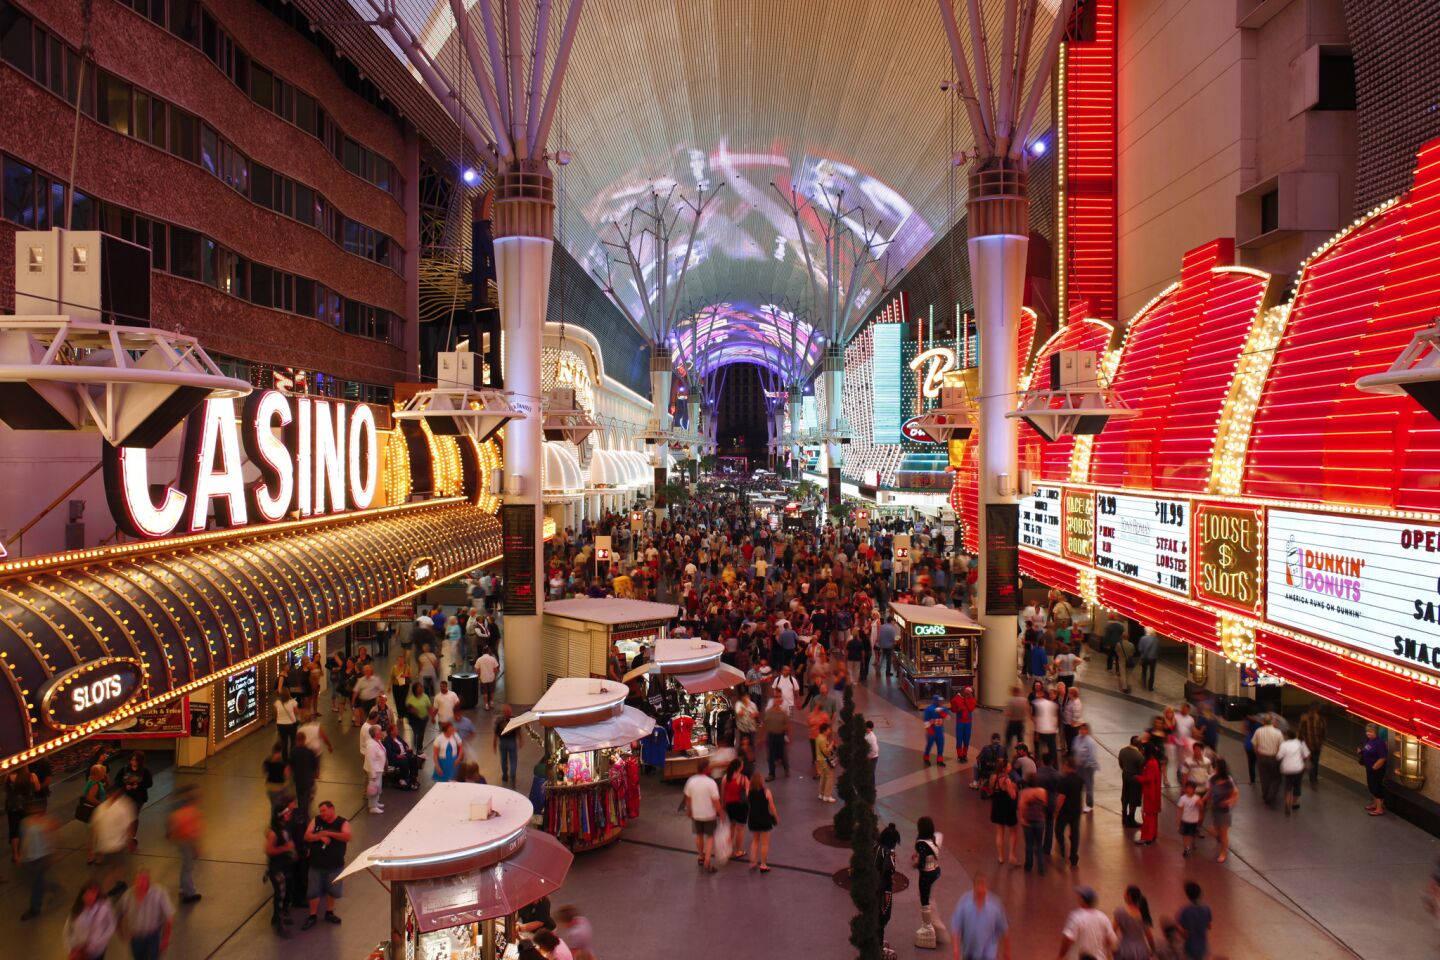 The Freemont Street Experience in downtown Las Vegas was designed by Jon Jerde.